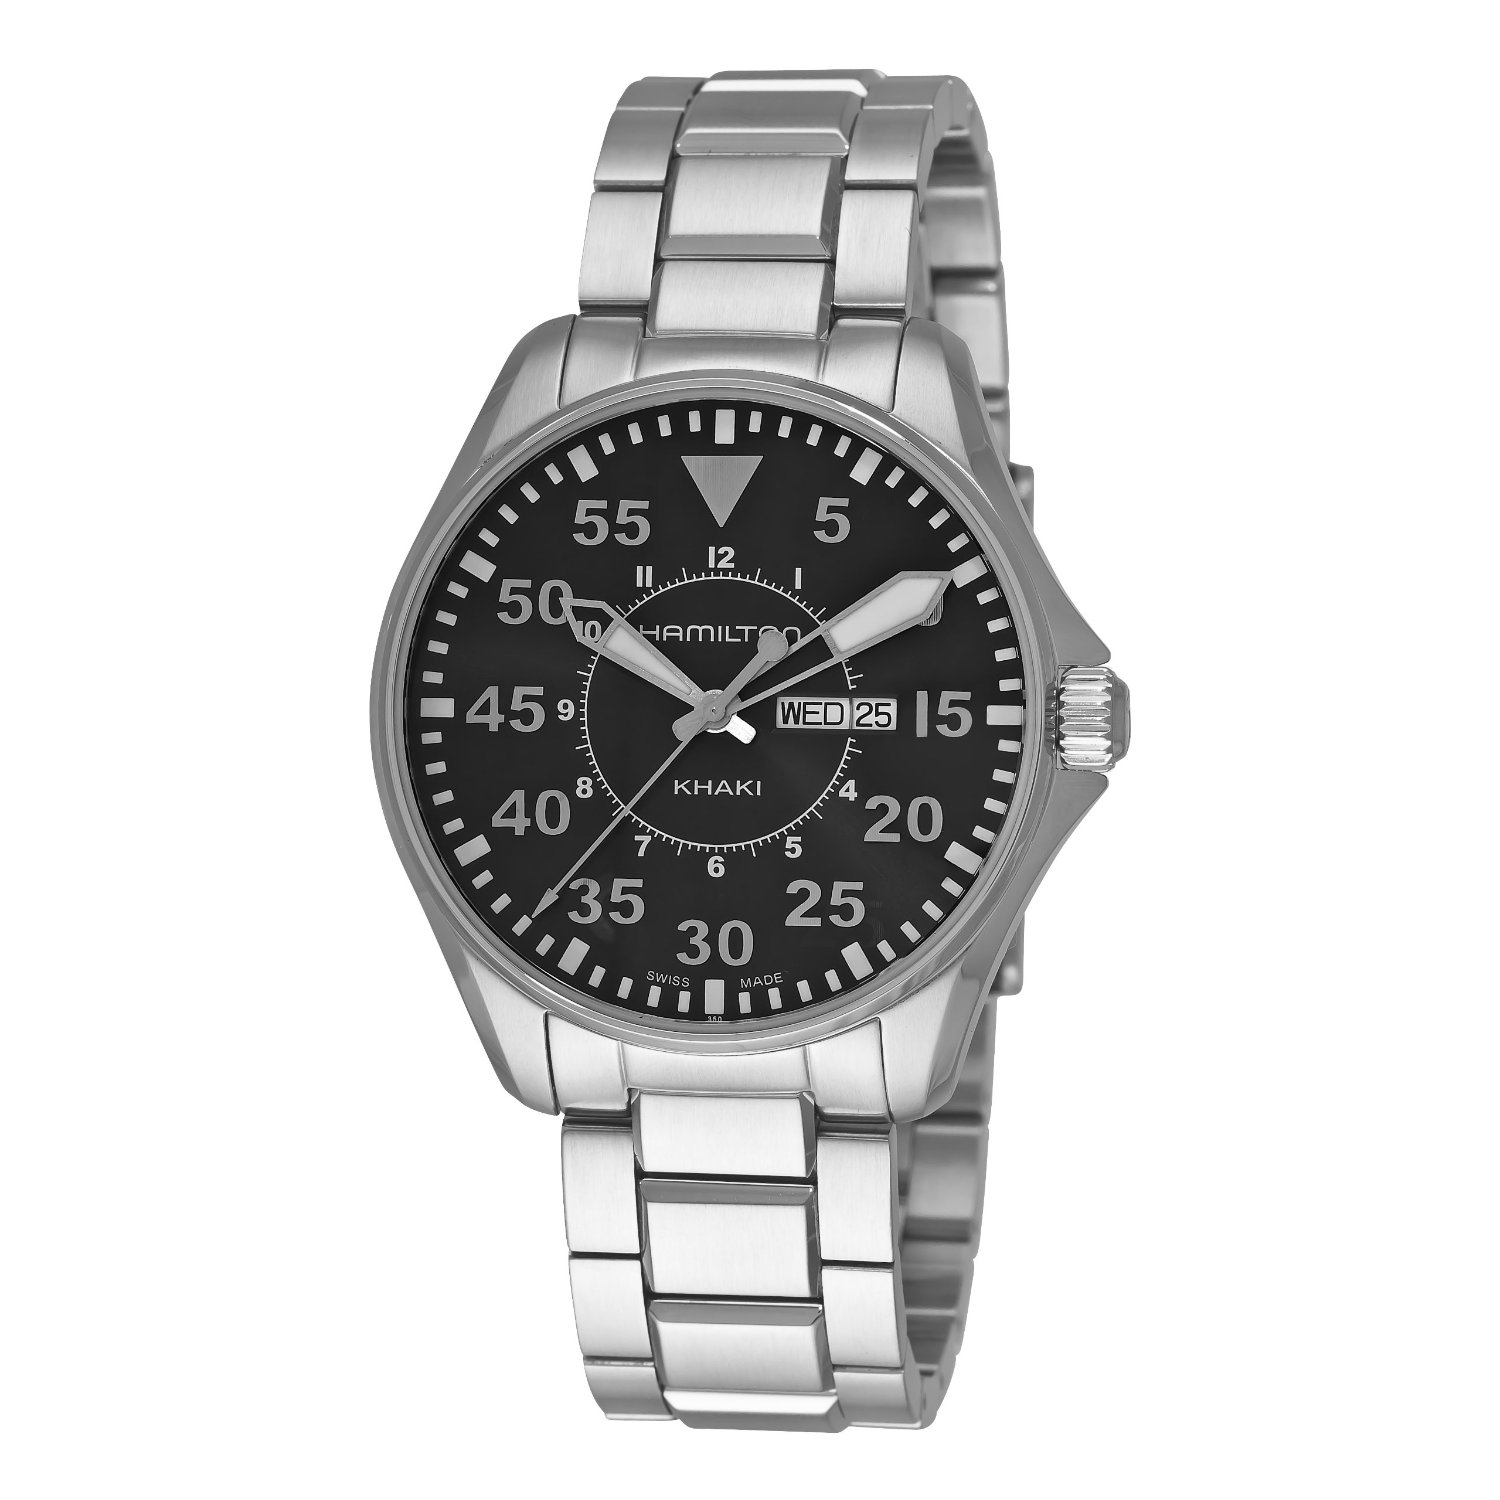 Hamilton Watches | Hamilton Watch: Hamilton Men's Watch - H64611135